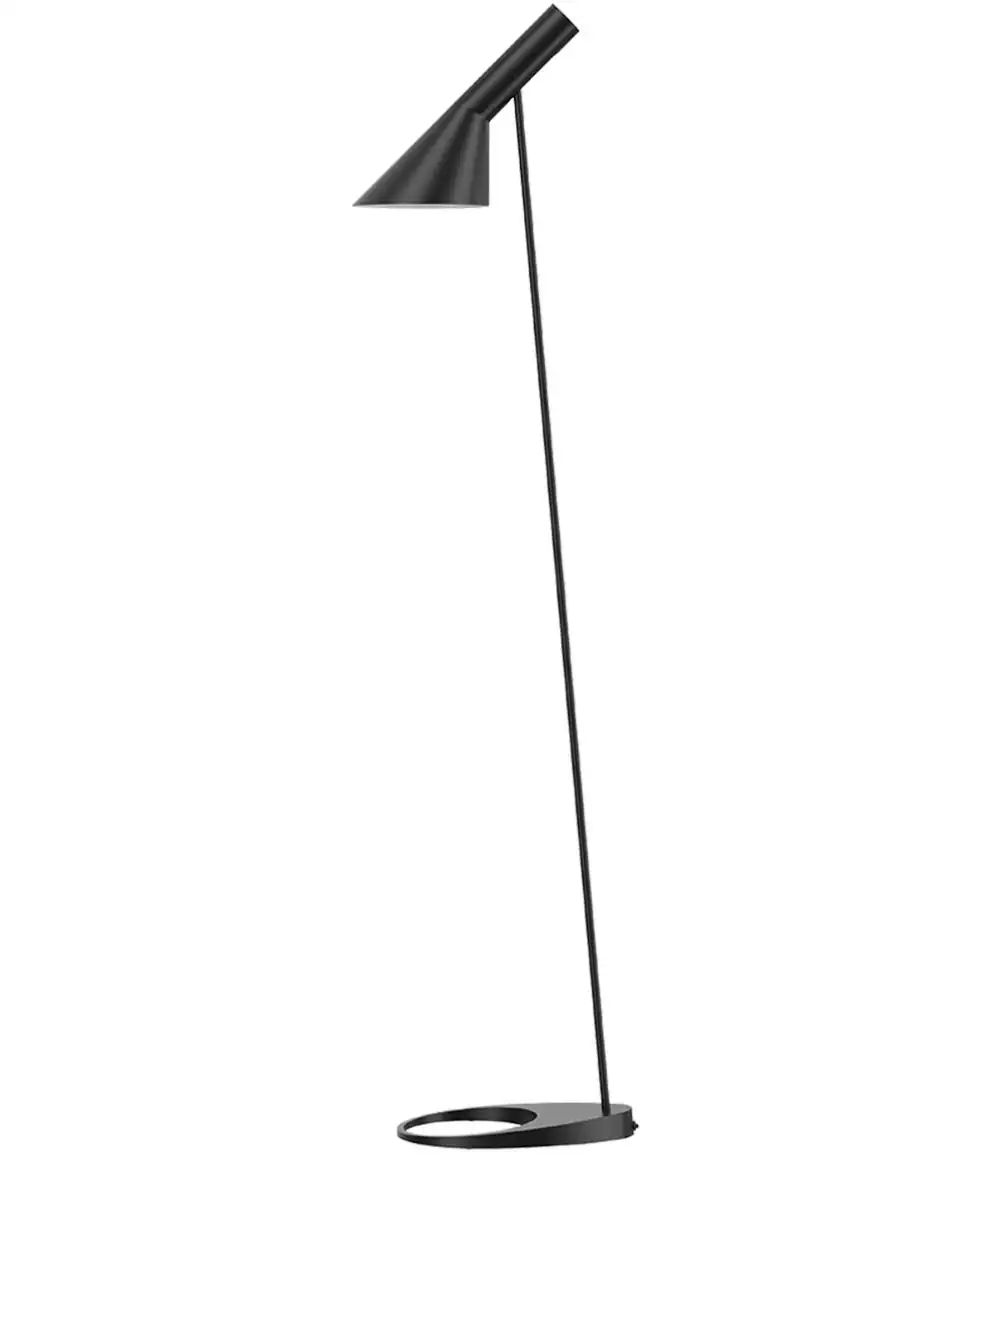 AJ floor lamp (130cm x 27.5cm) | Farfetch Global